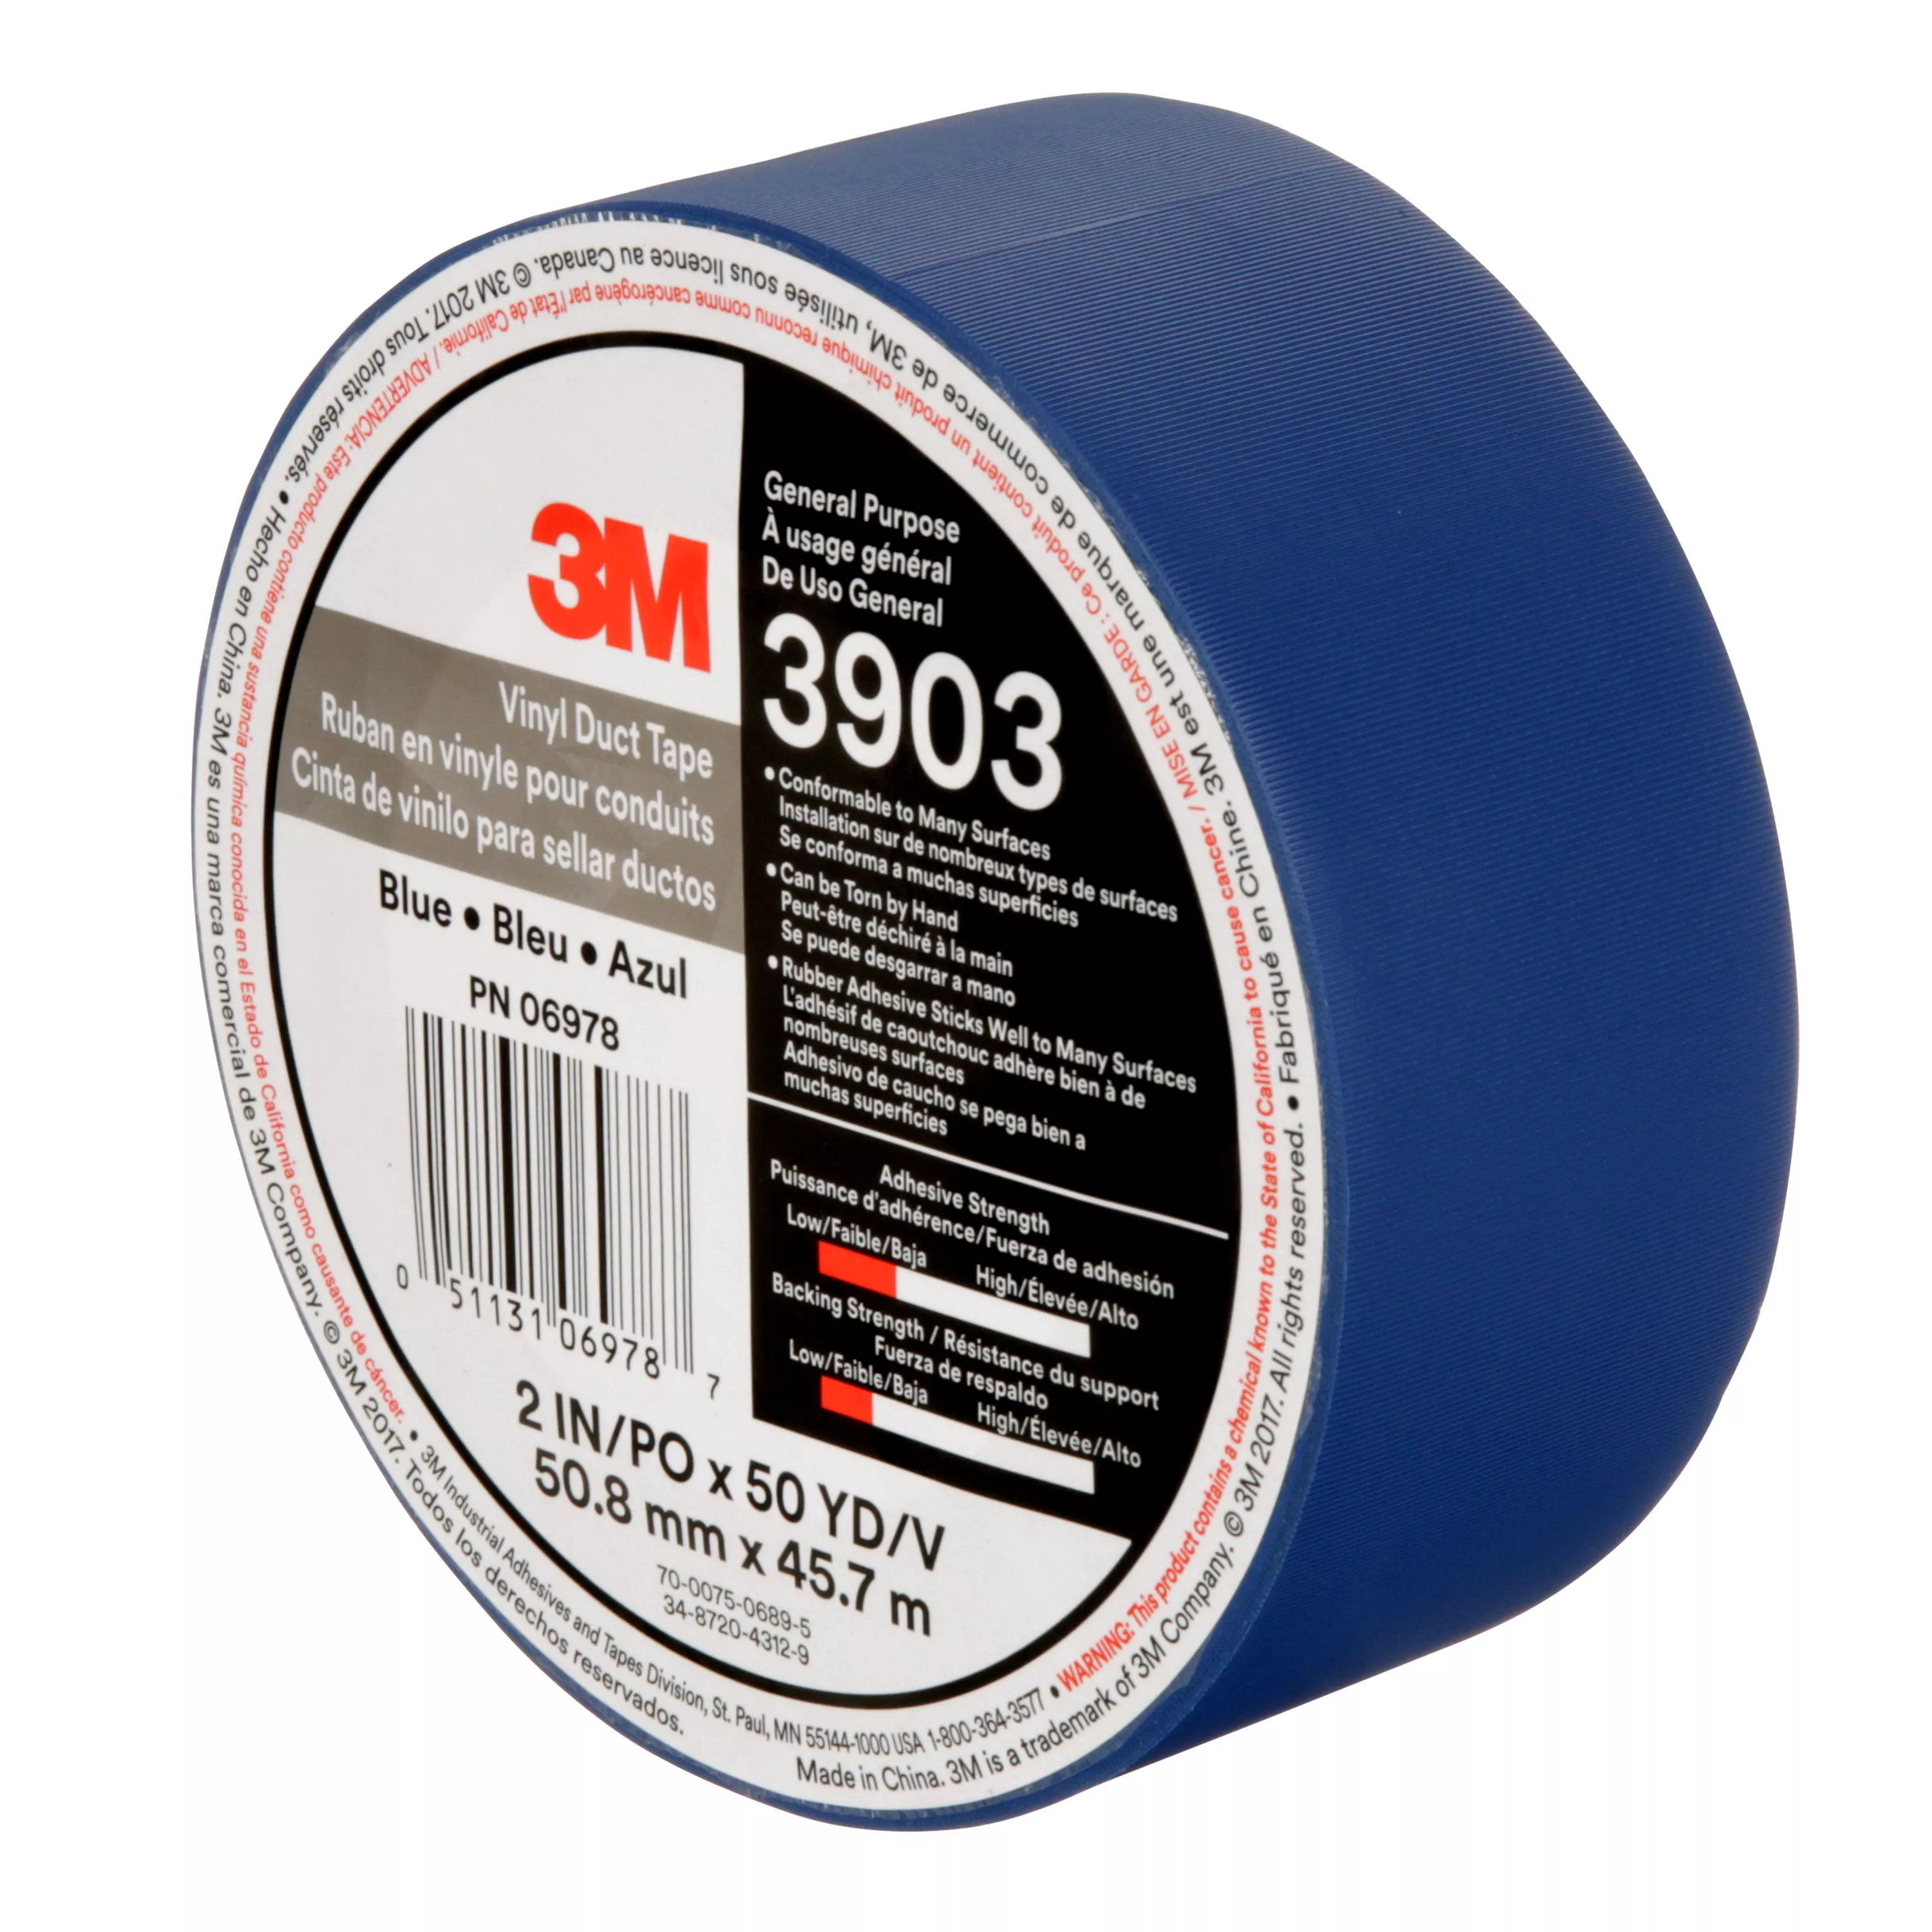 SKU 7100155016 | 3M™ Vinyl Duct Tape 3903